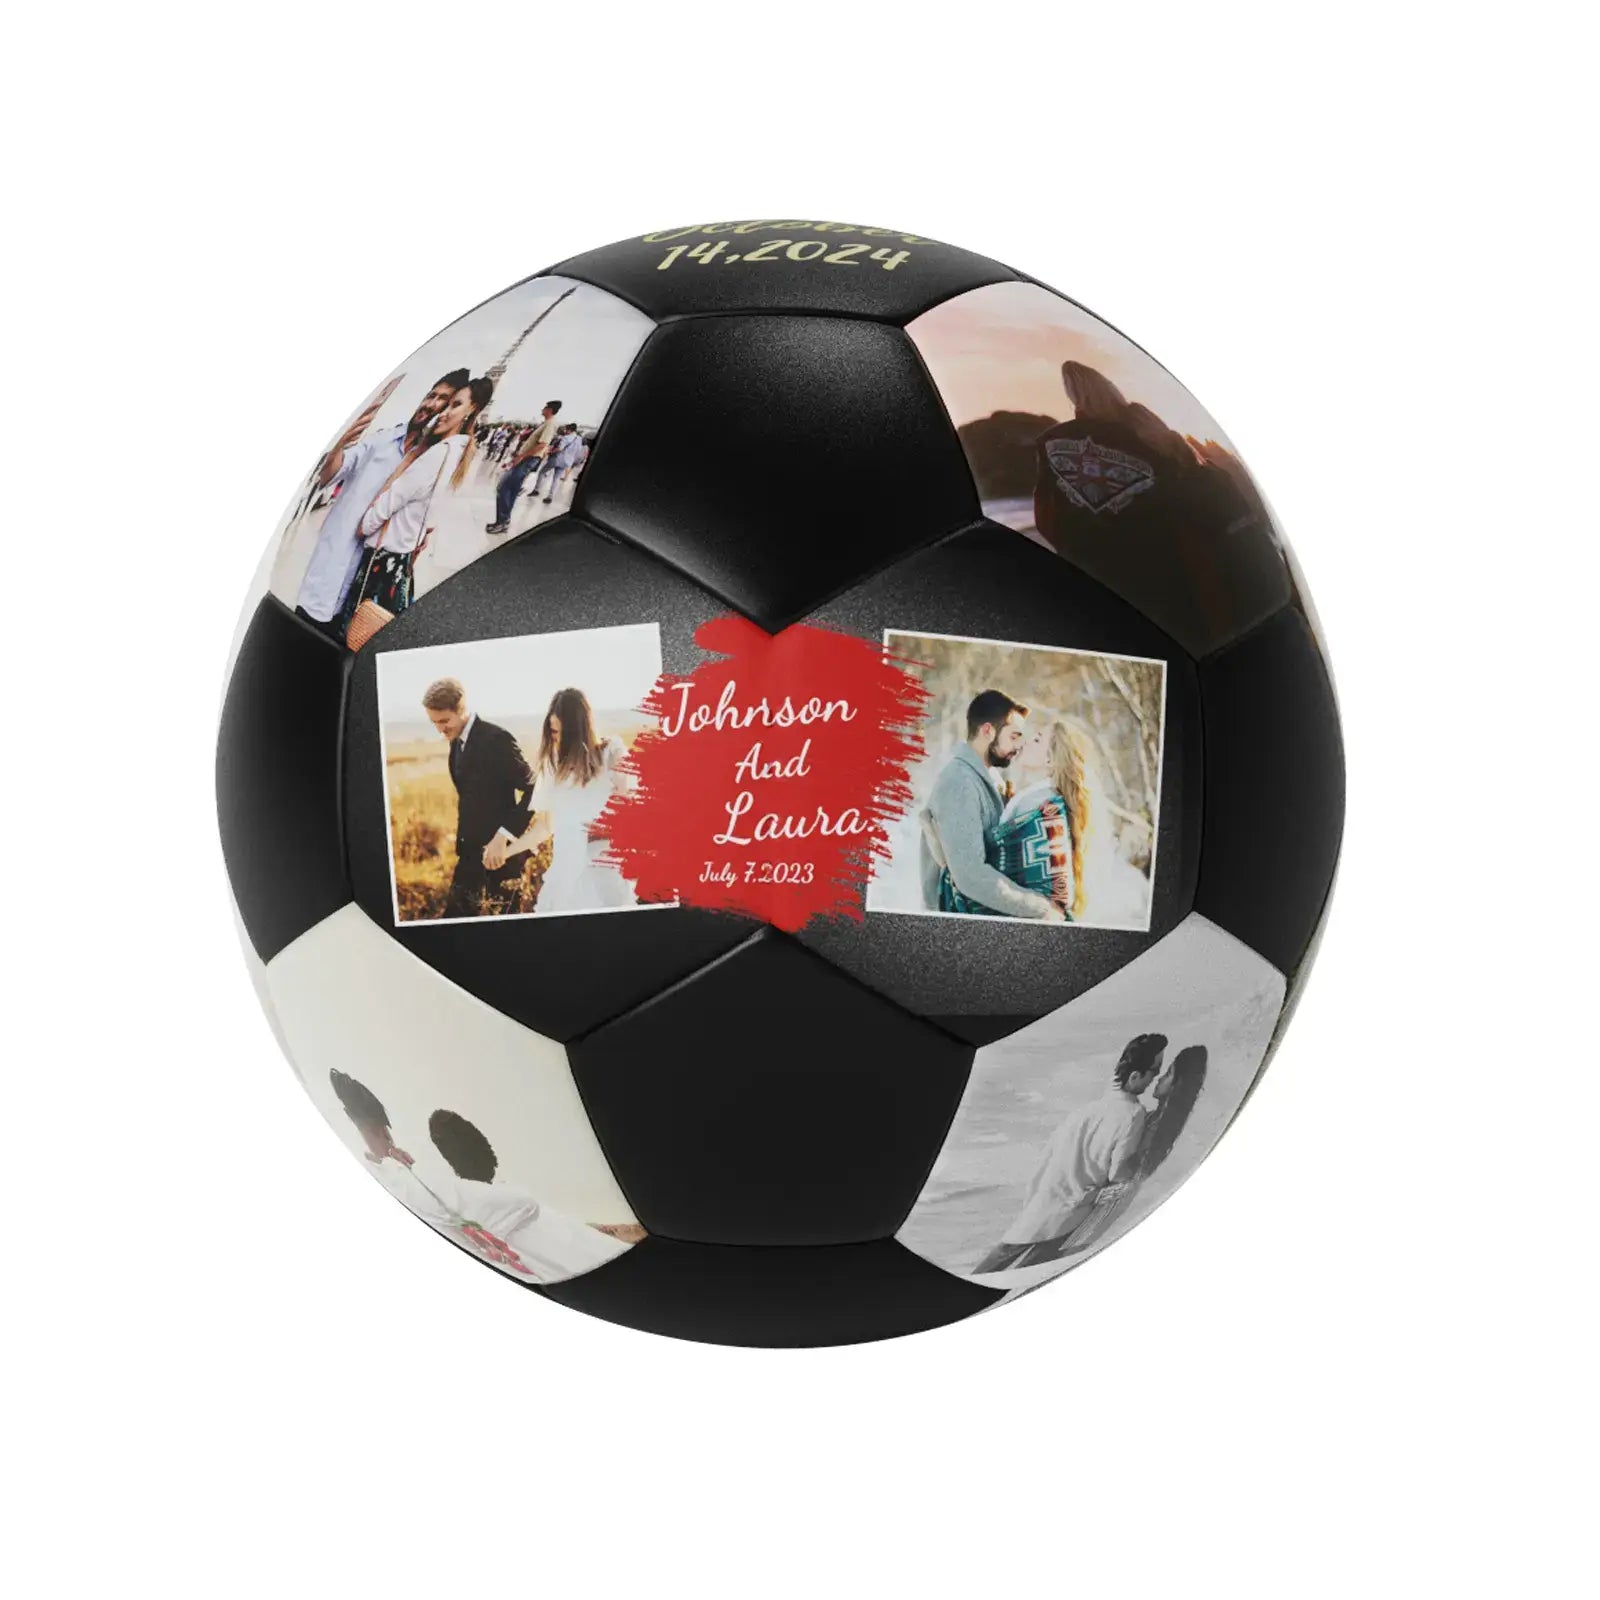 Personalized Custom Gift Soccer Ball